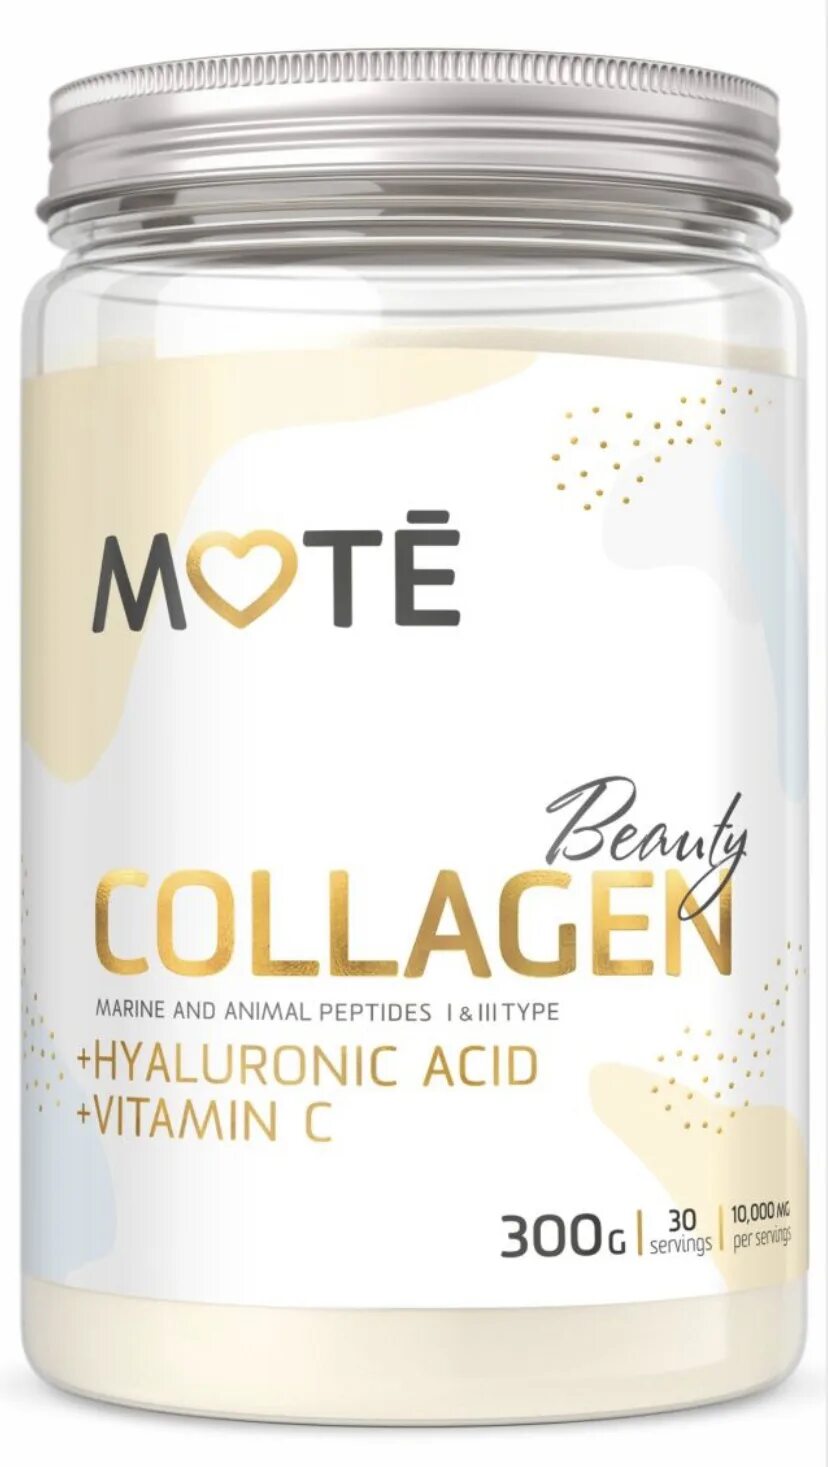 Collagen vitamin c отзывы. Mote коллаген. Коллаген моте с витамином с. Collagen Vitamin c порошок. Коллаген Mote «Collagen + витамин с + гиалуроновая кислота».